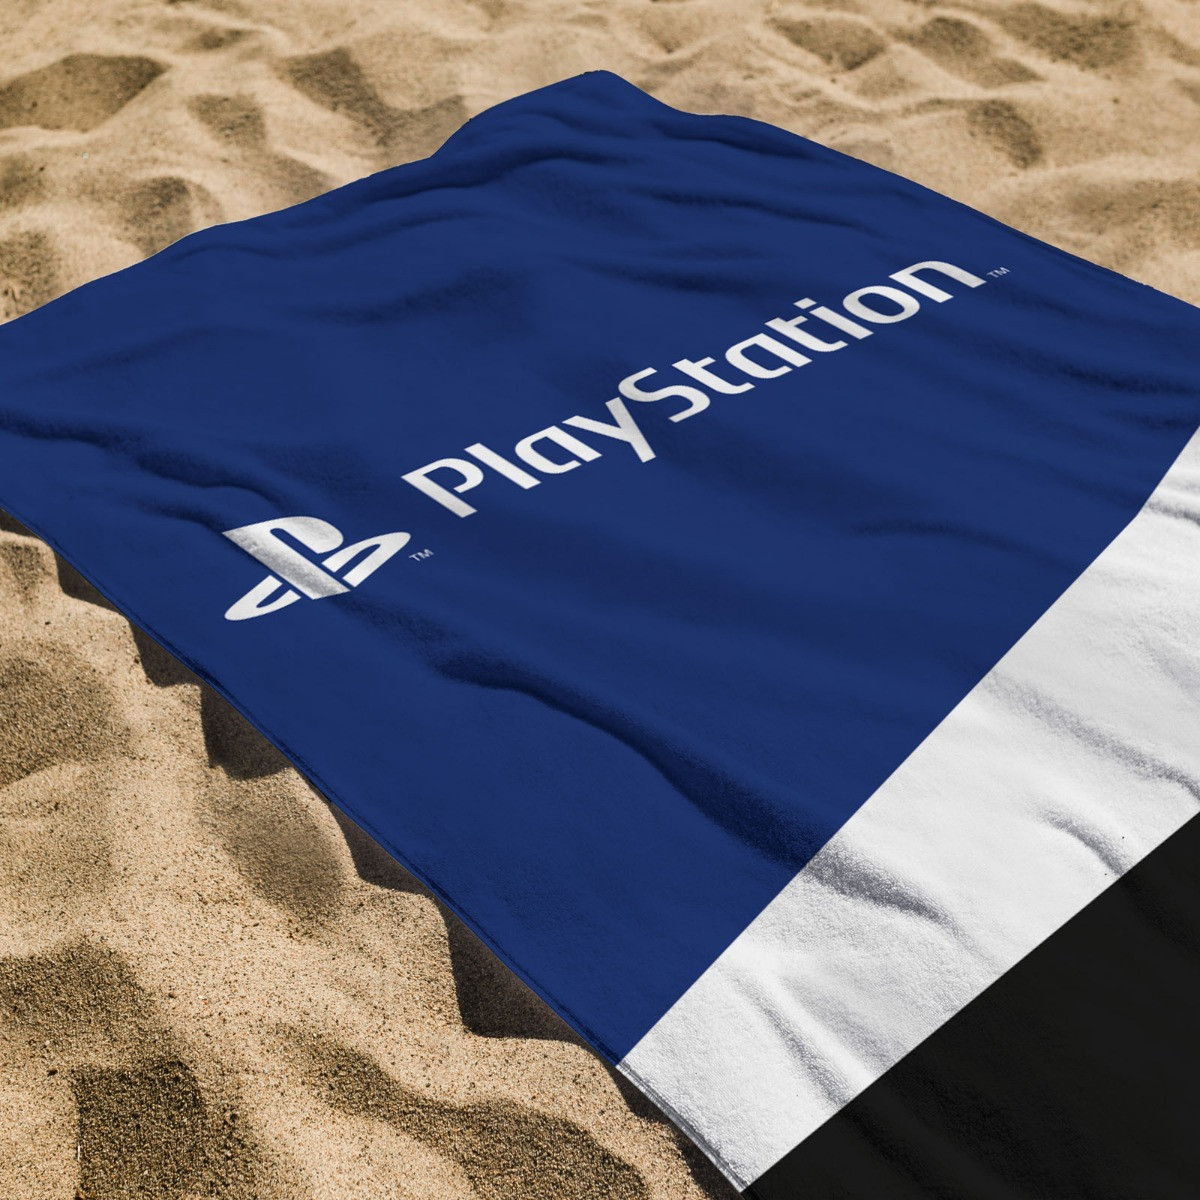 Playstation Banner Beach Towel - Blue>